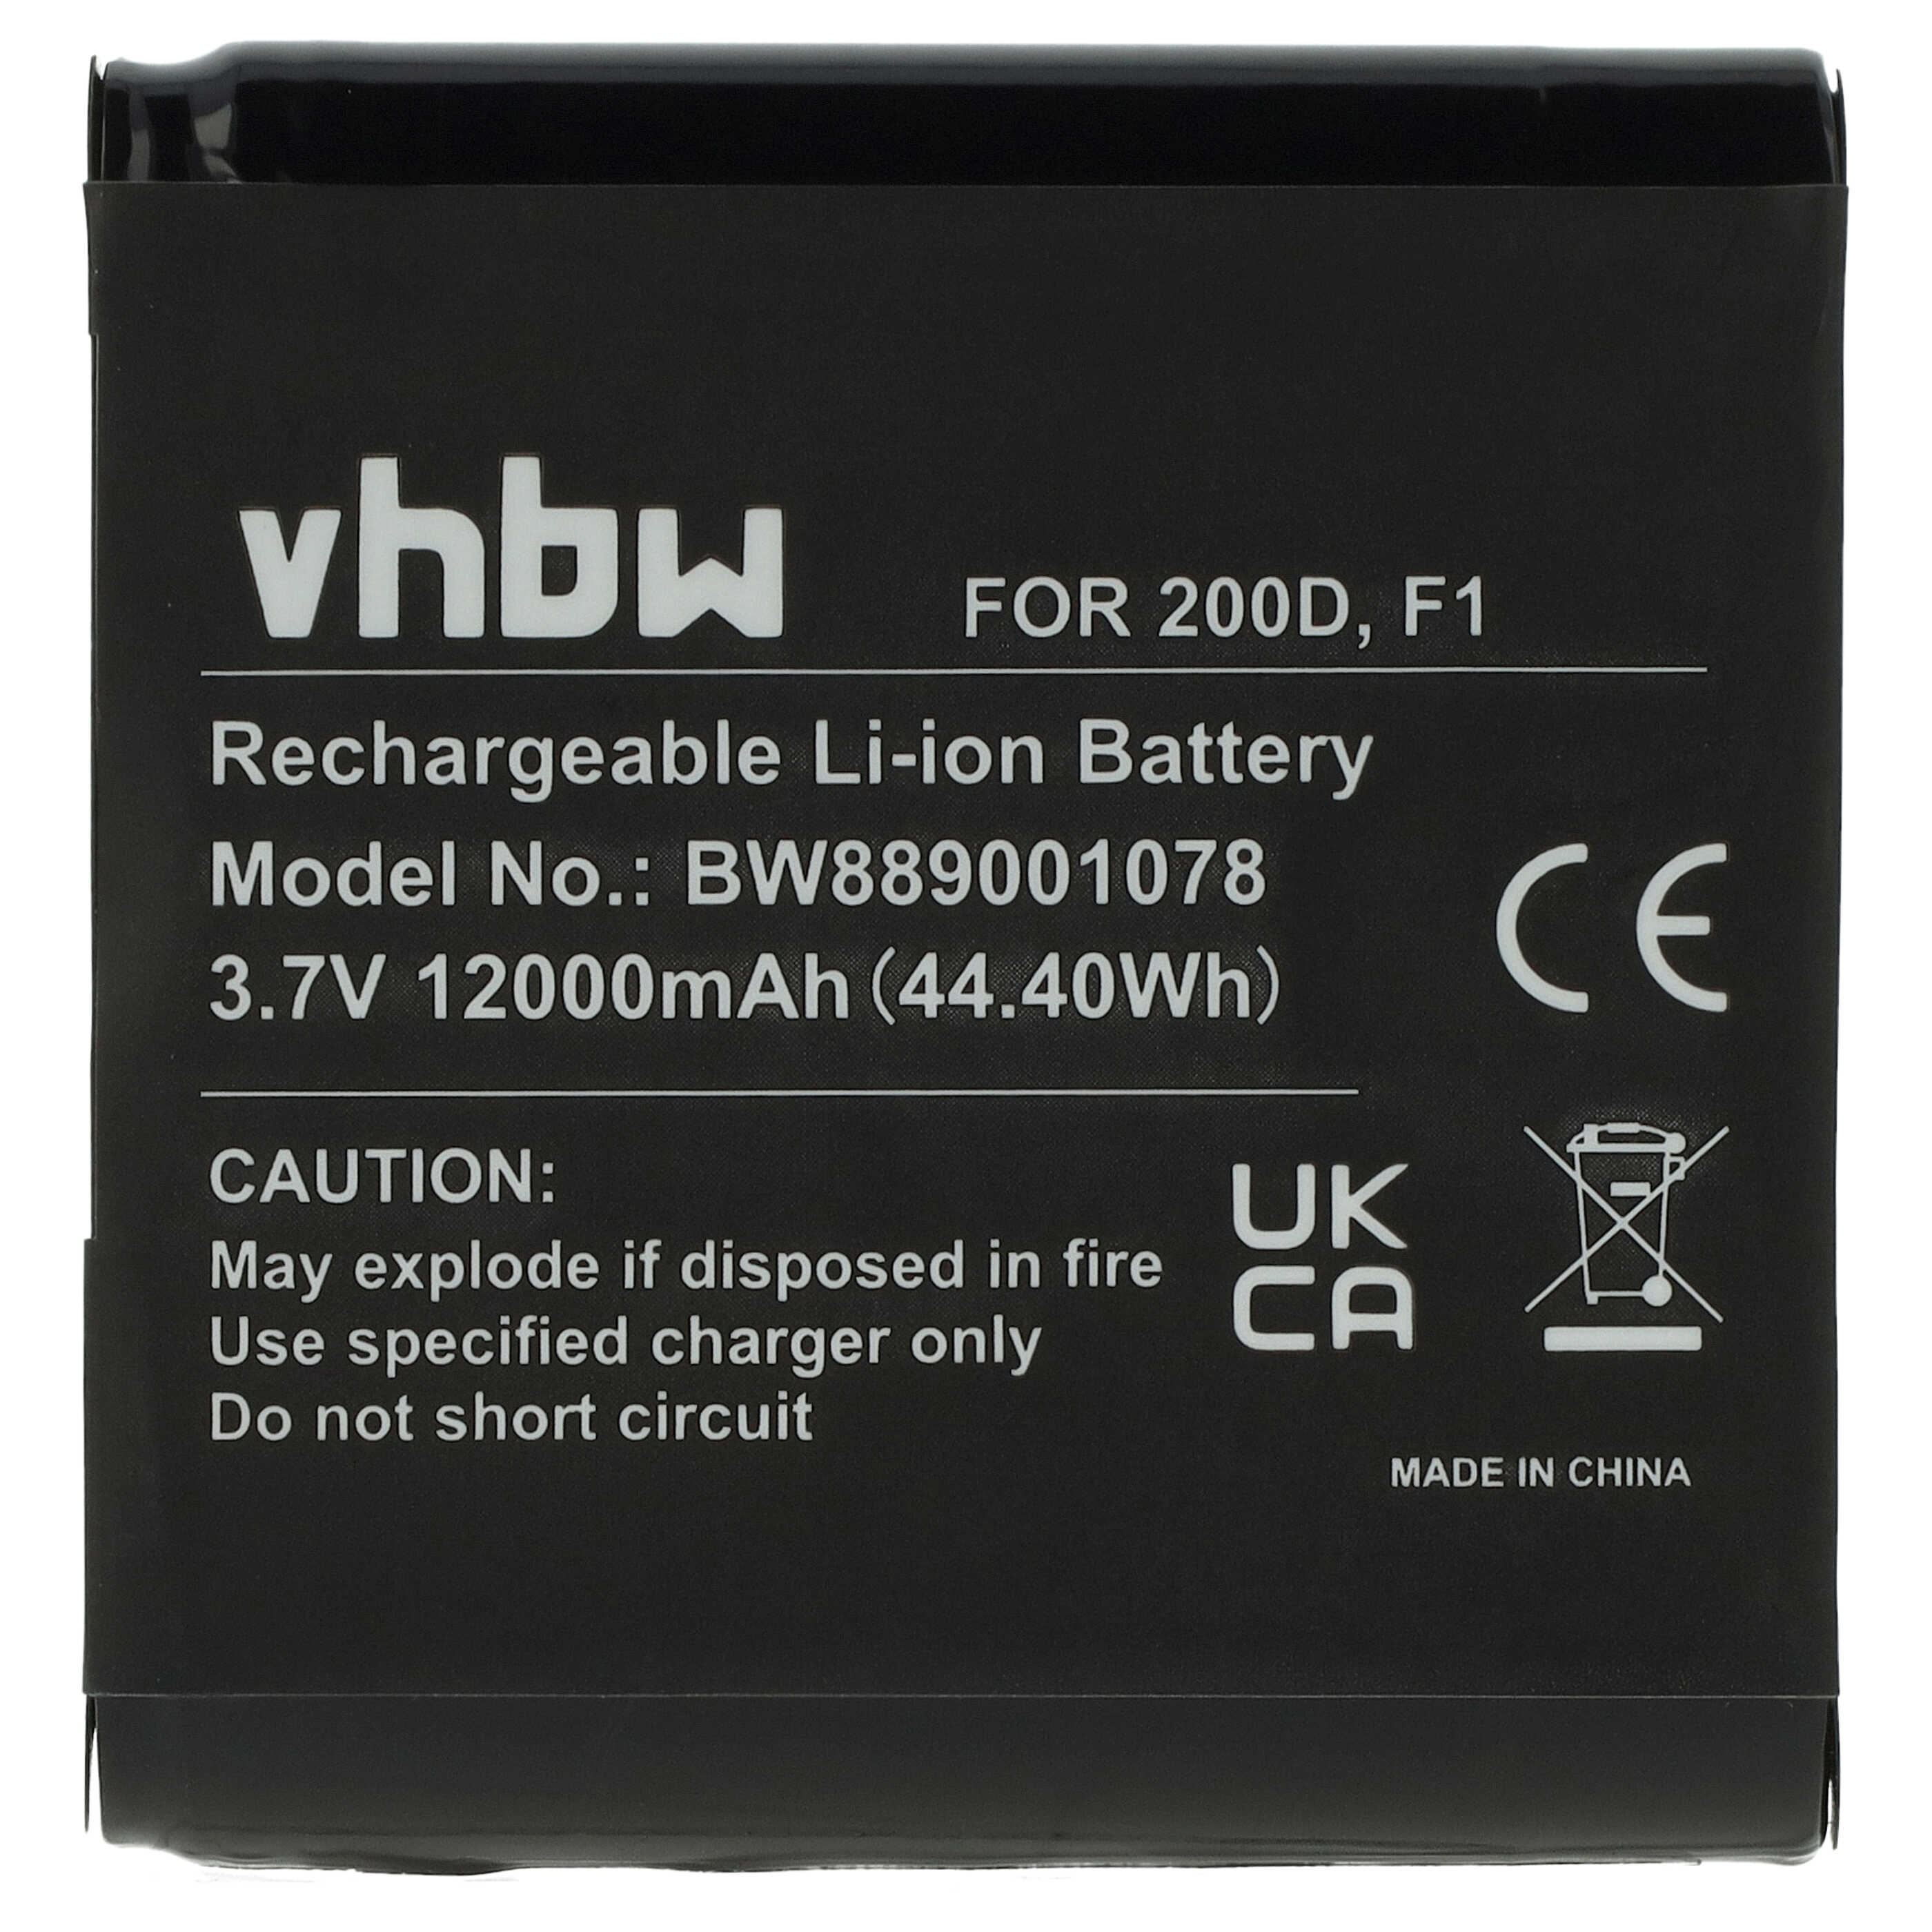 Batterie remplace Pure ChargePAK F1, F1 pour radio - 12000mAh 3,7V Li-ion